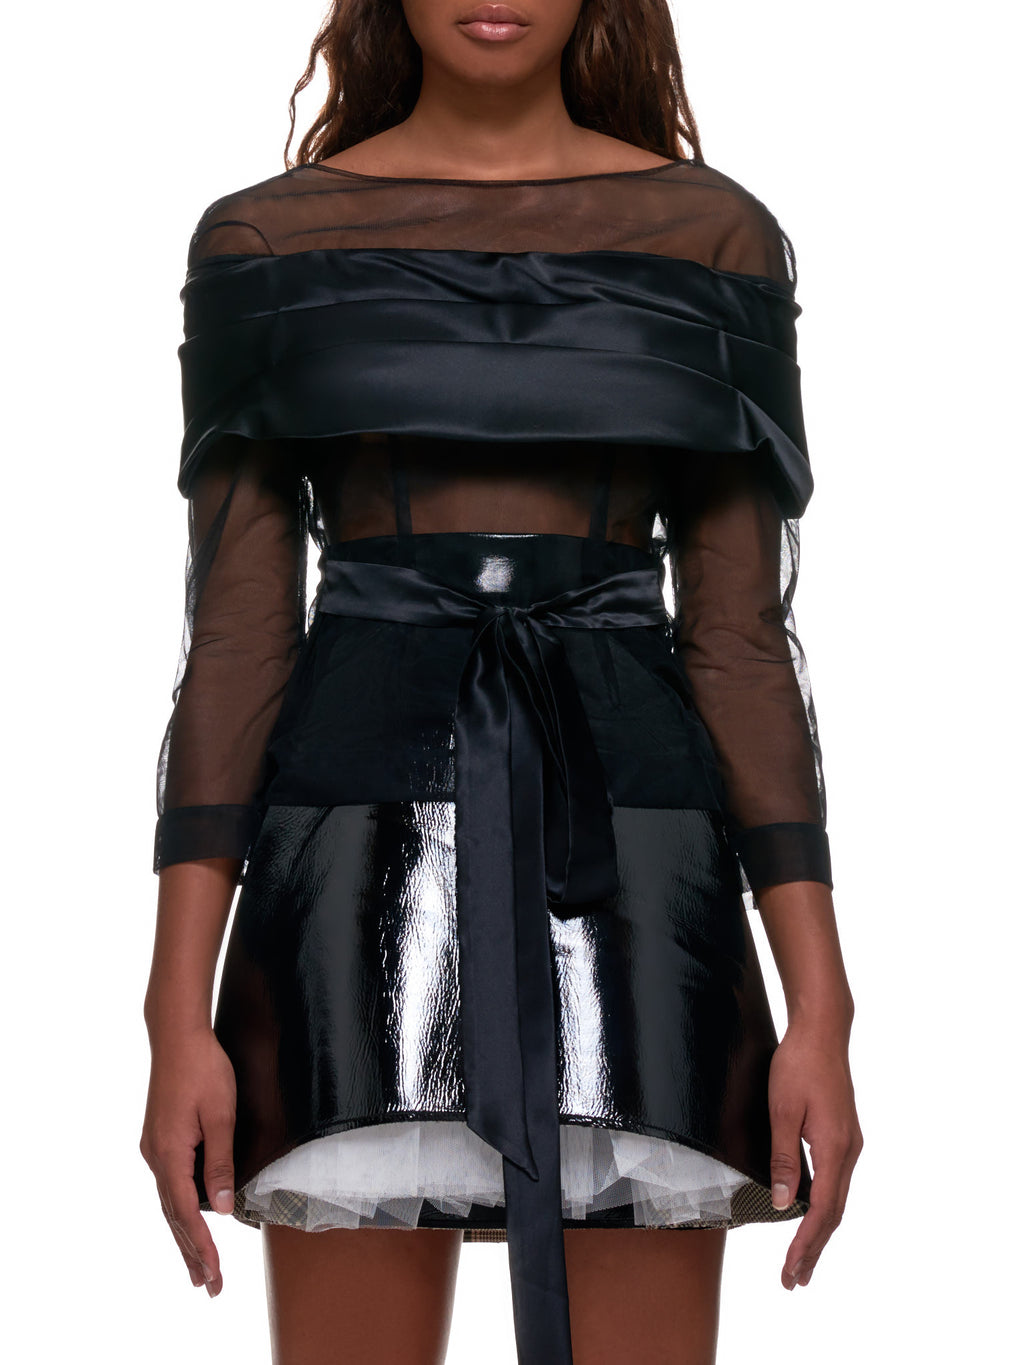 Simone Rocha Leather Bustier Top – Tulerie